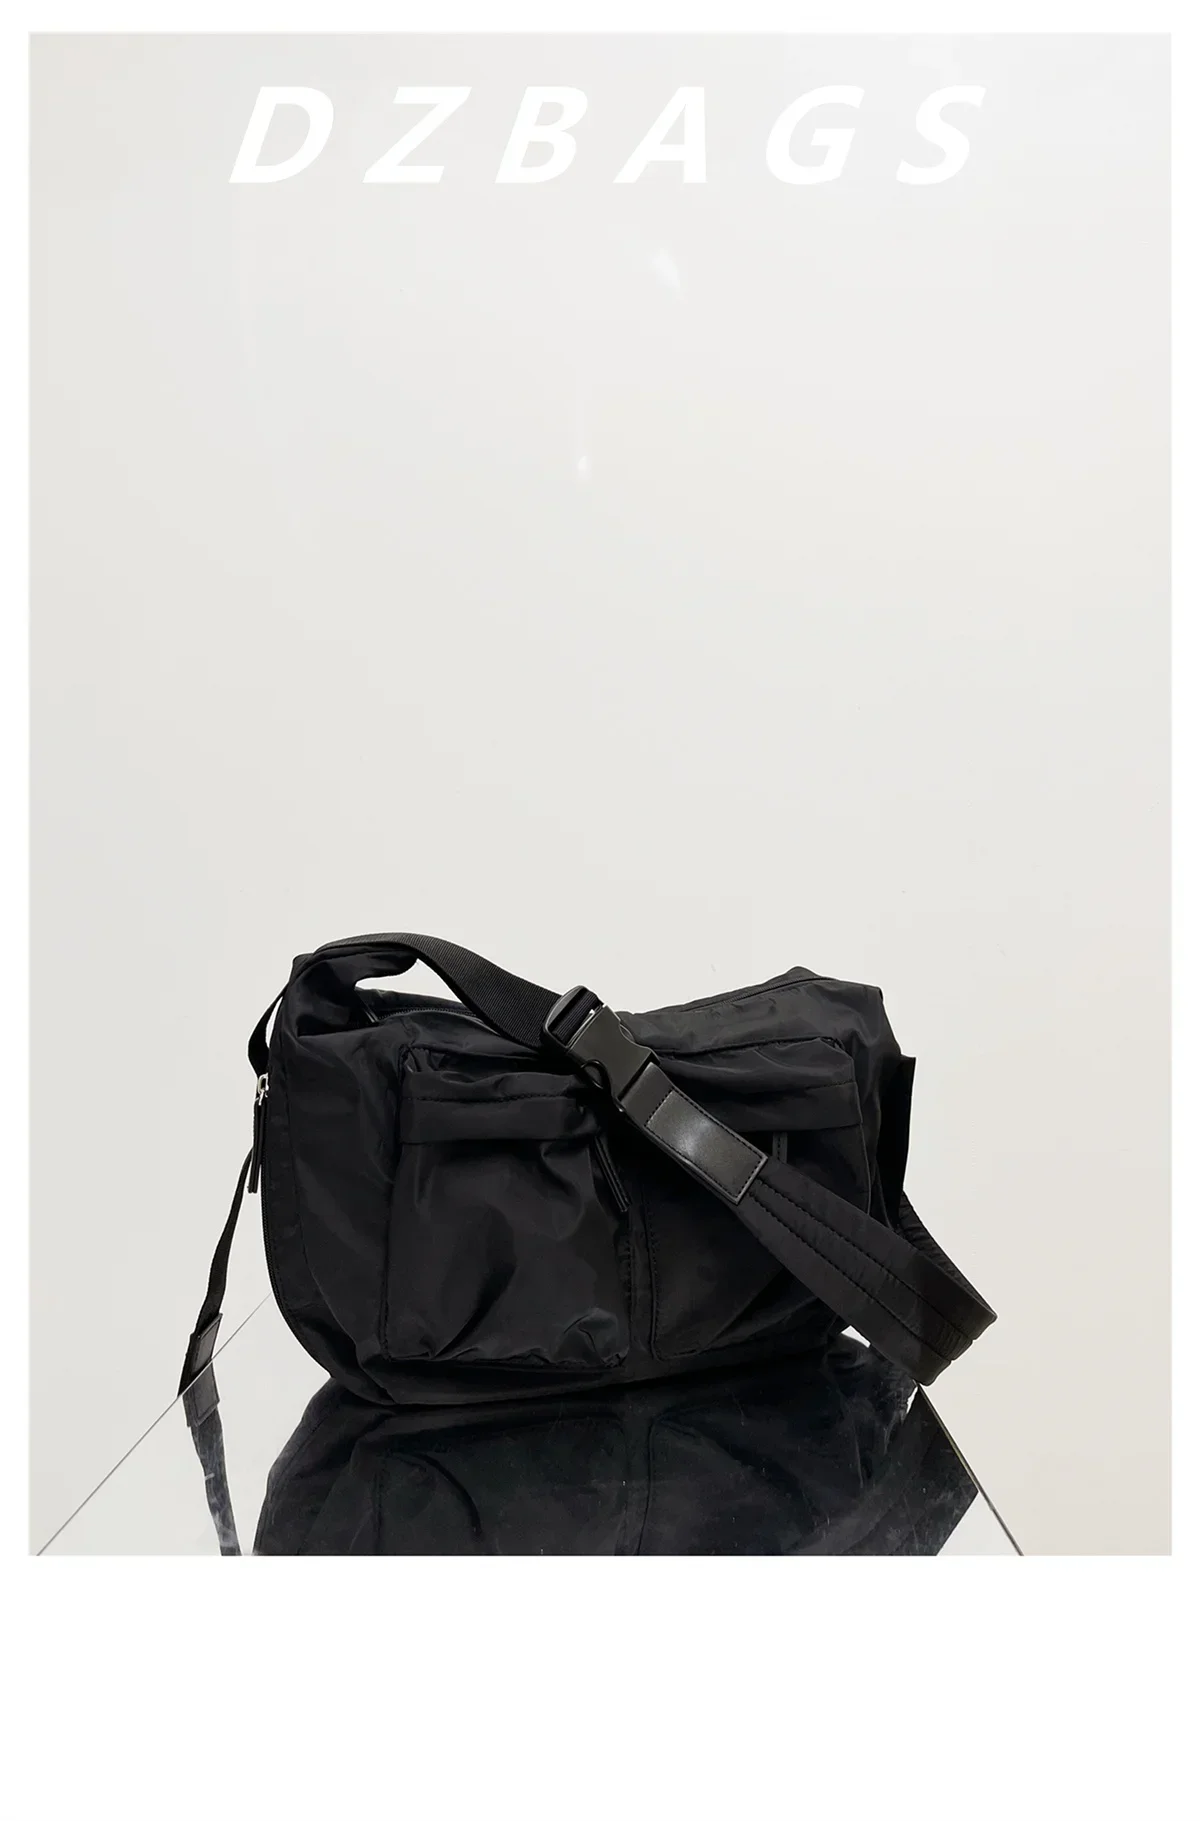 Houlder bag ins trend waterproof school bag messenger bag square crossbody commuter gym thumb200